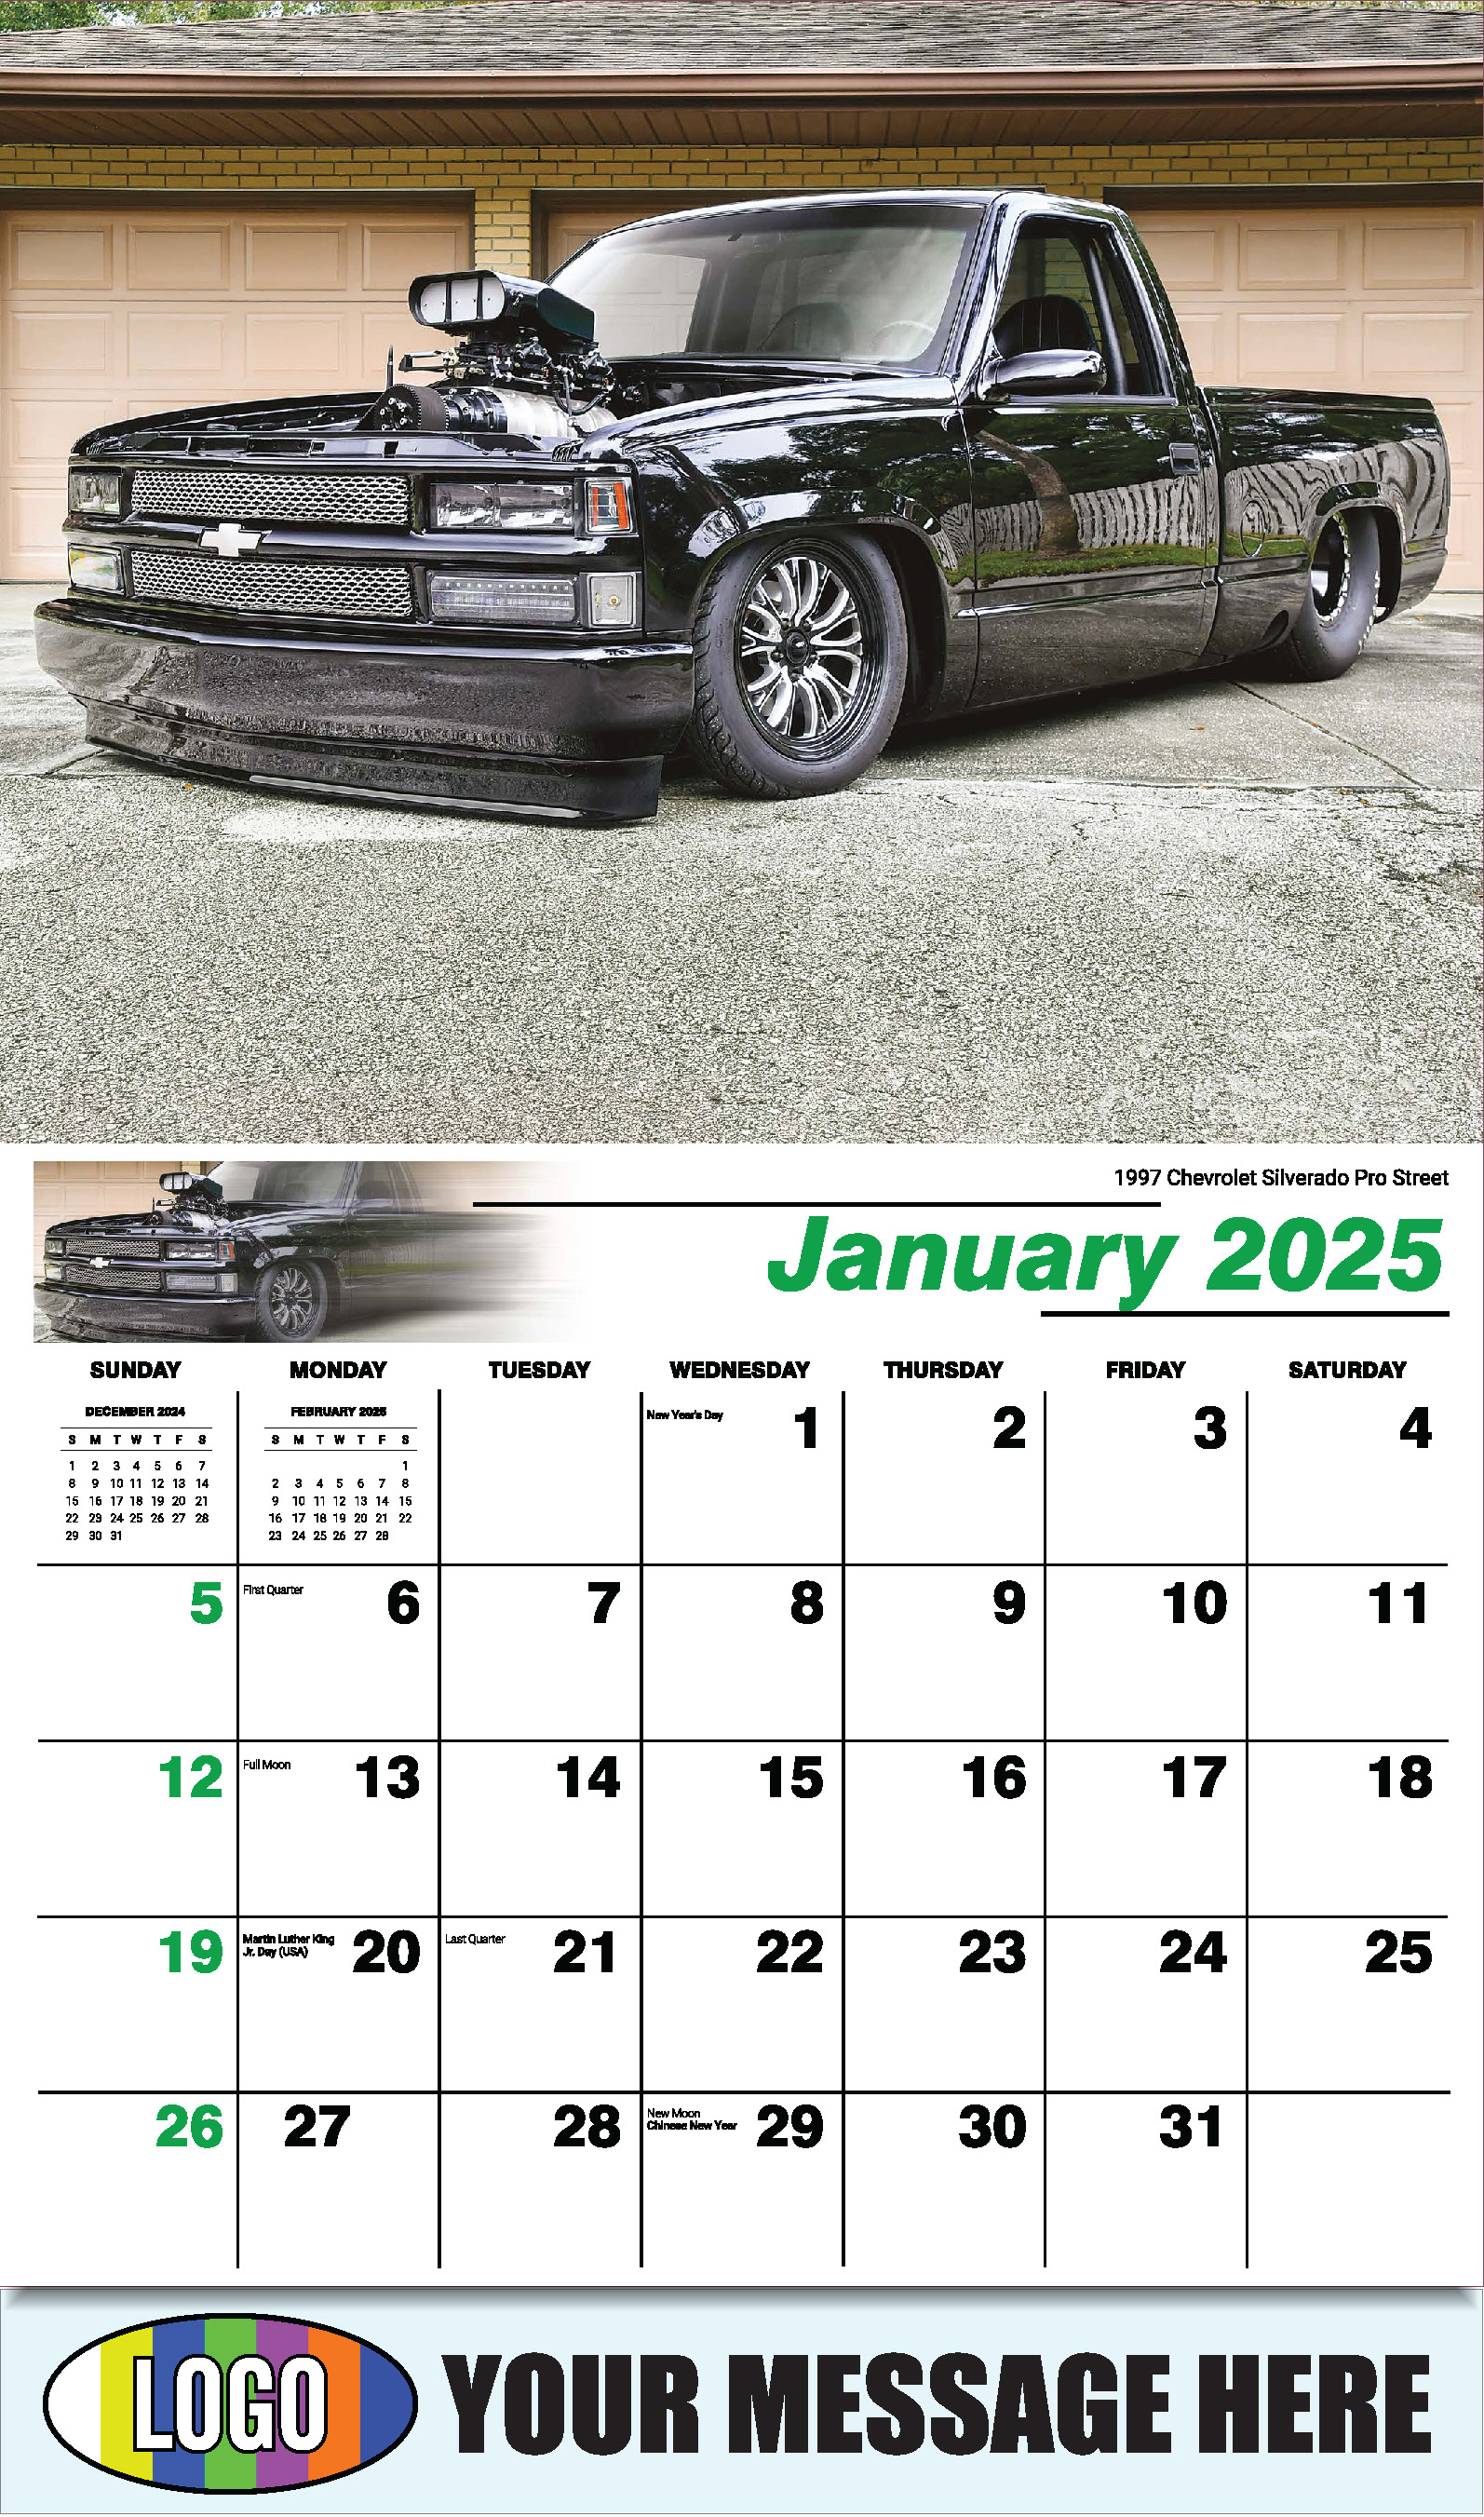 Pumped-Up Pickups 2025 Automotive Business Promo Calendar - January